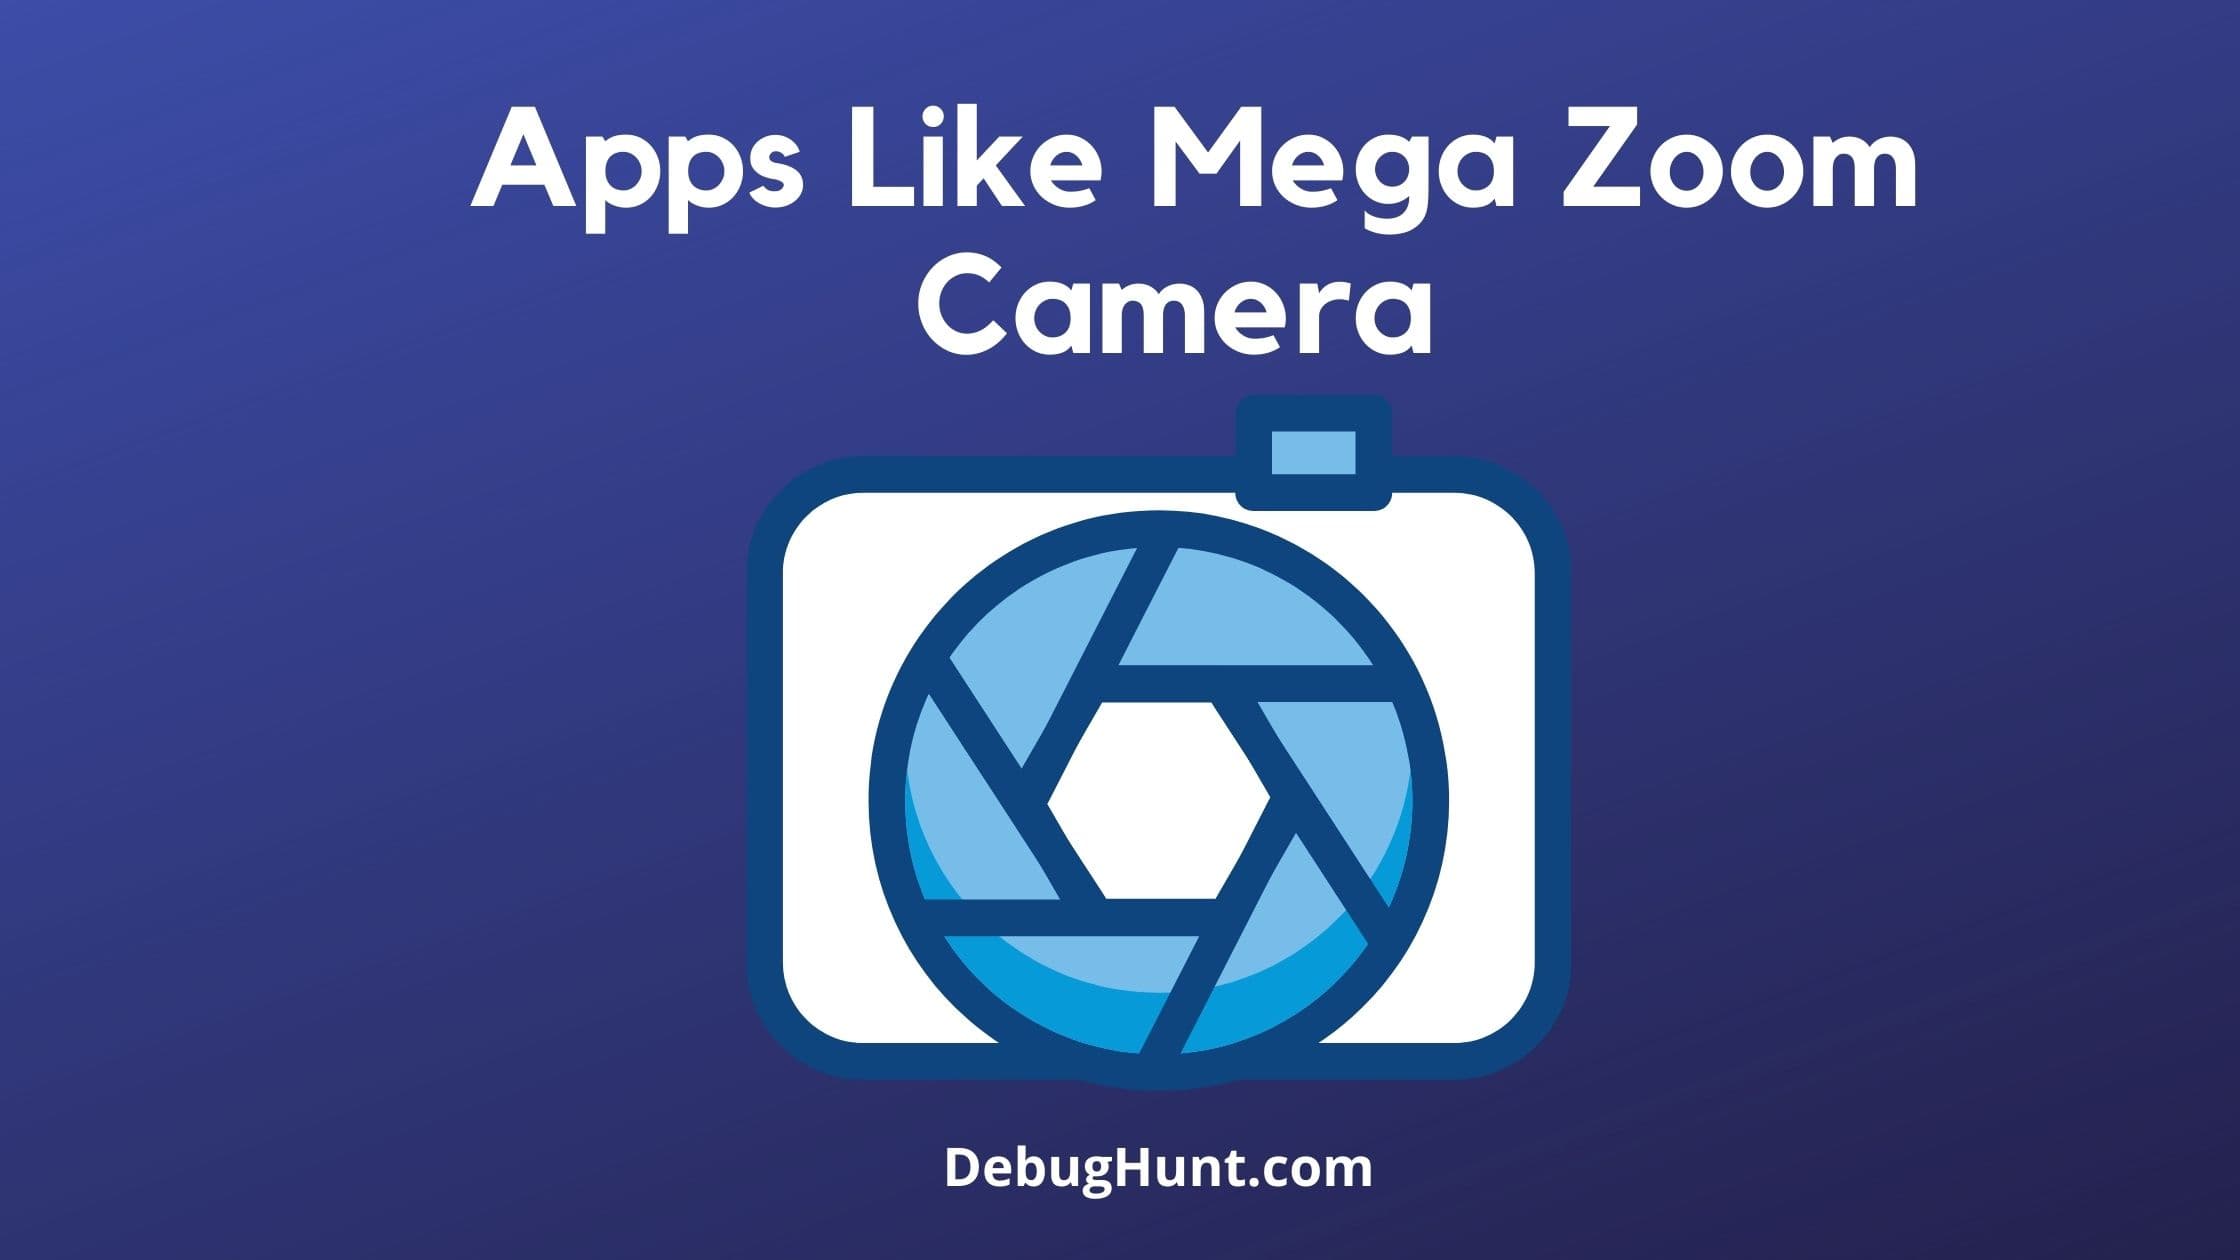 Apps Like Mega Zoom Camera